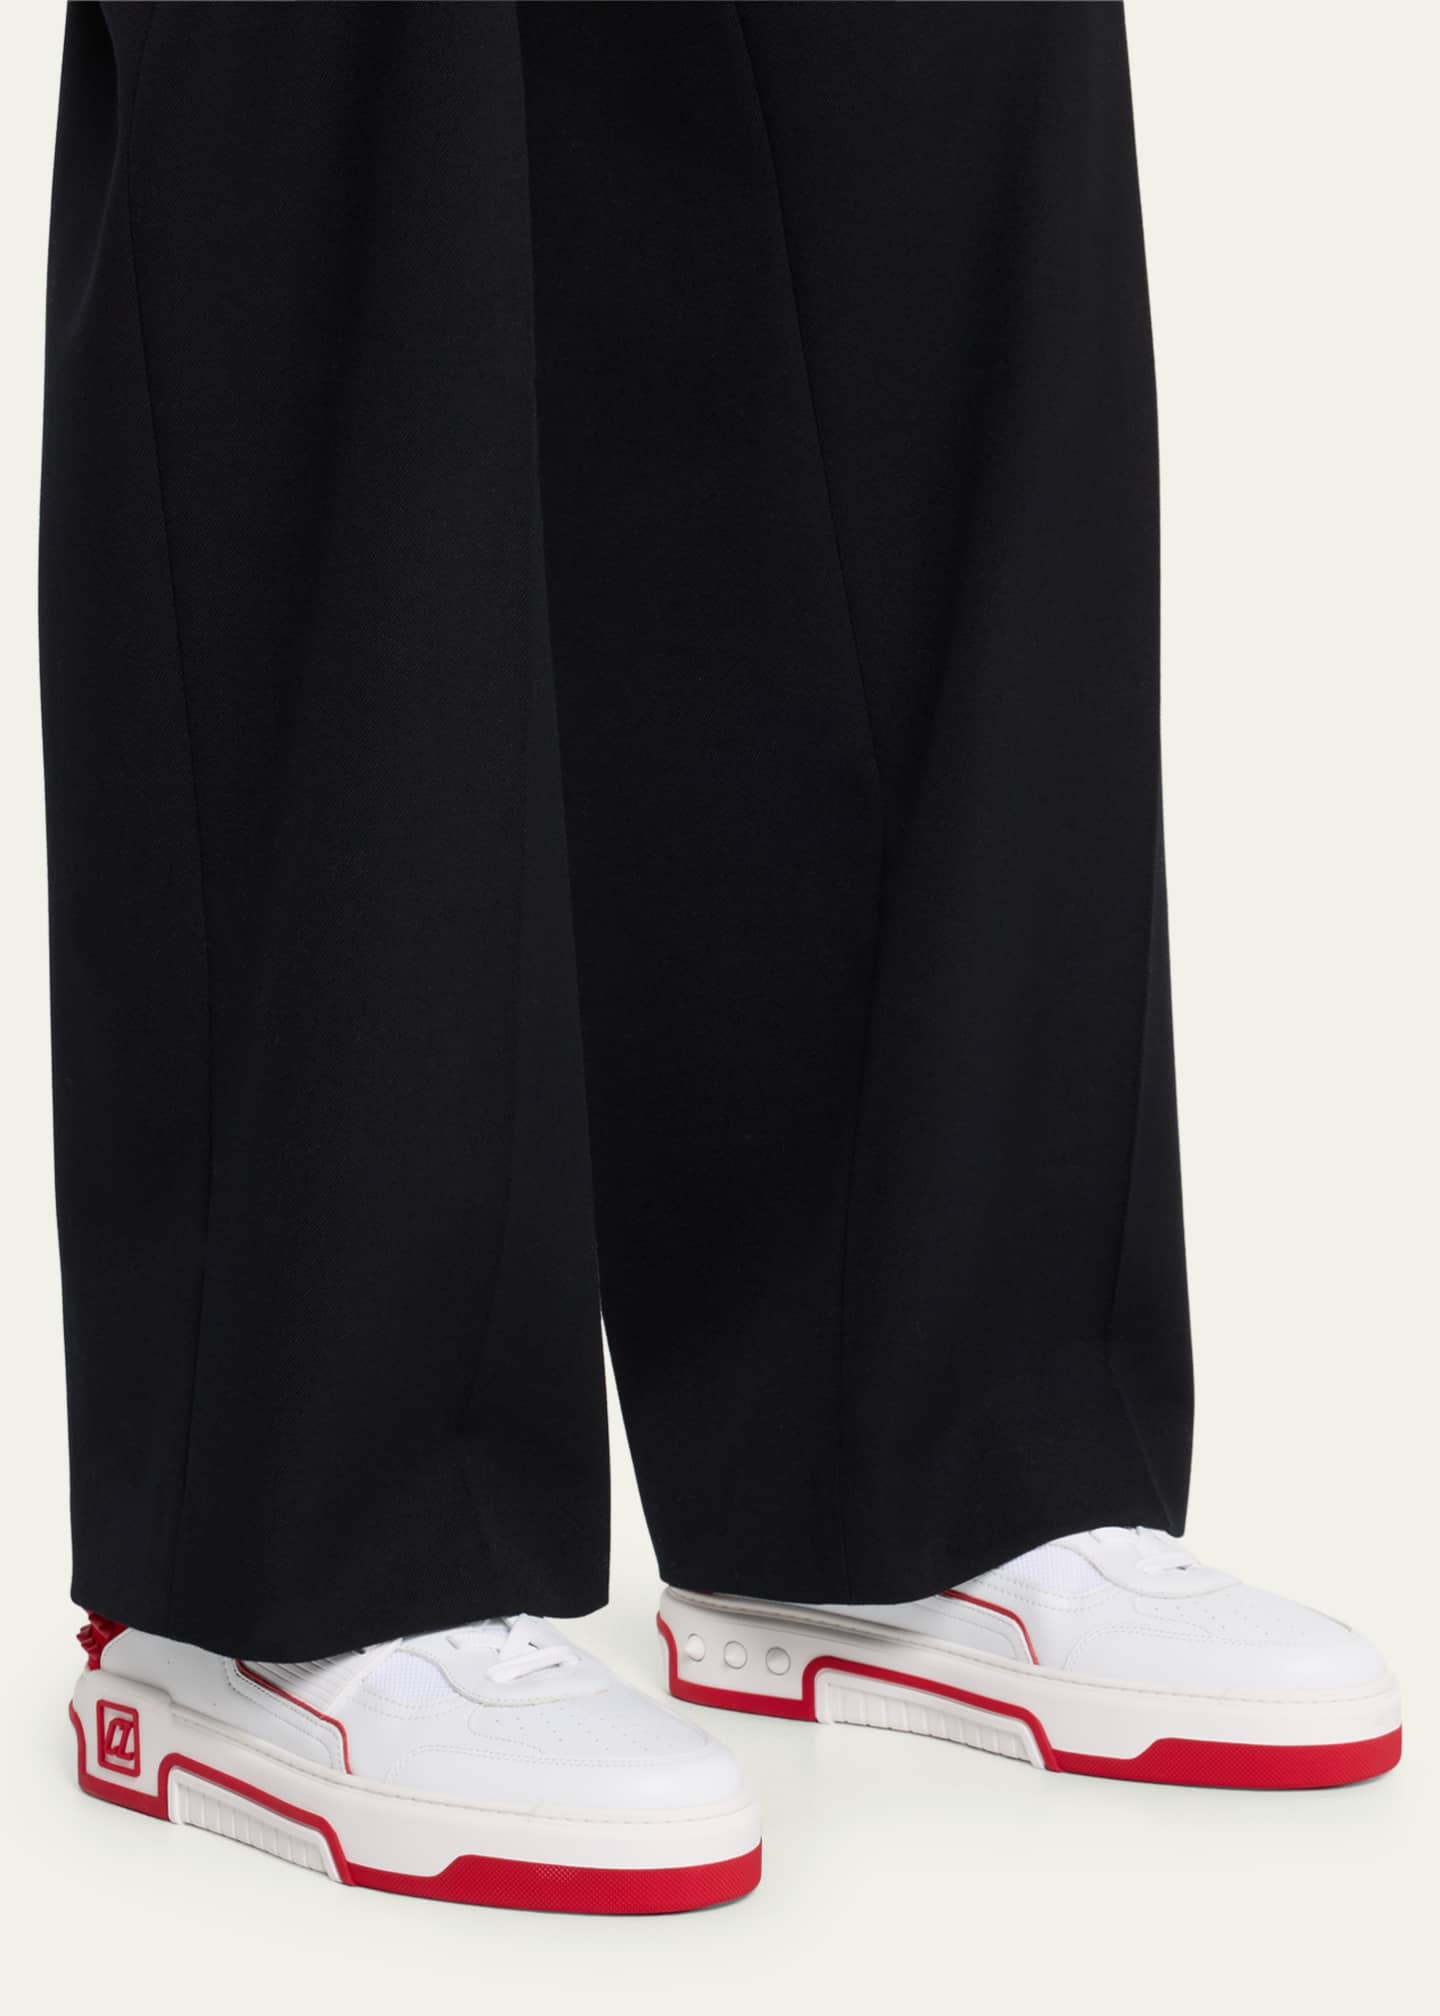 Christian Louboutin Women's Astroloubi Leather Low-top Sneakers - White - Size 8.5